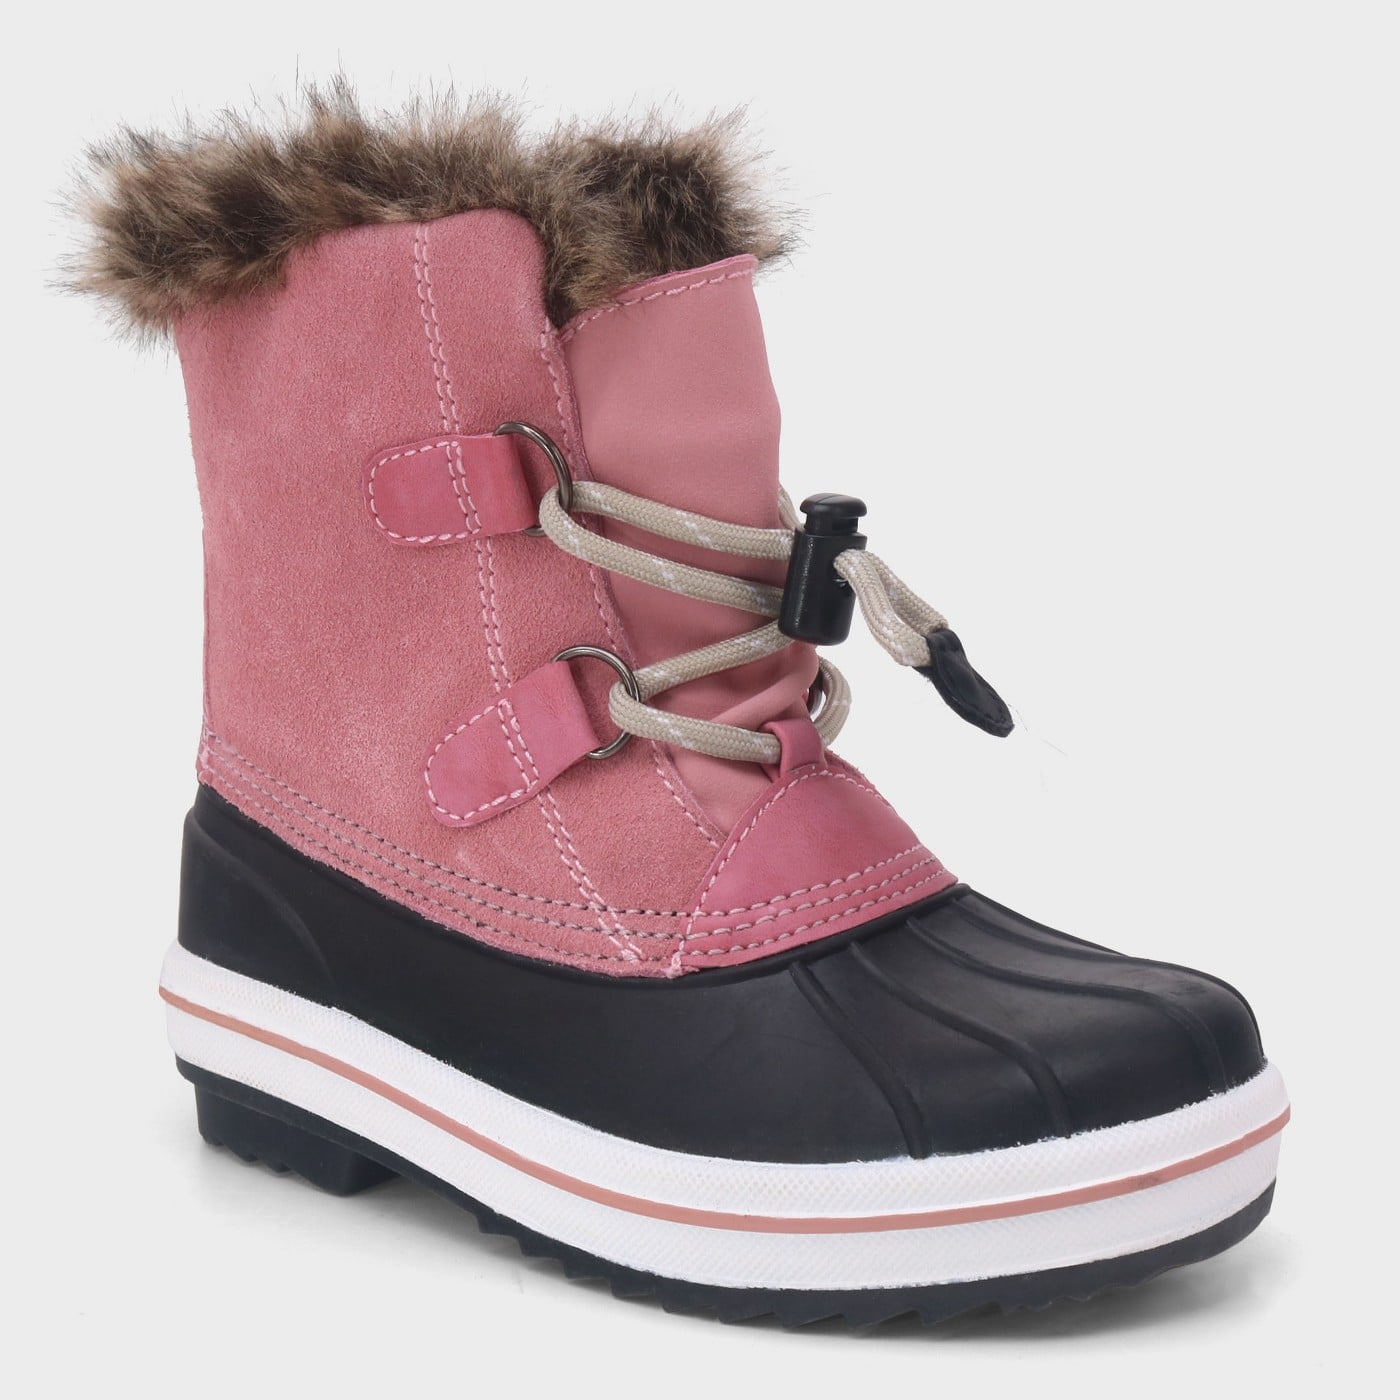 Boys Jalen Winter Boots New! Choose Size Cat & Jack™ Blue